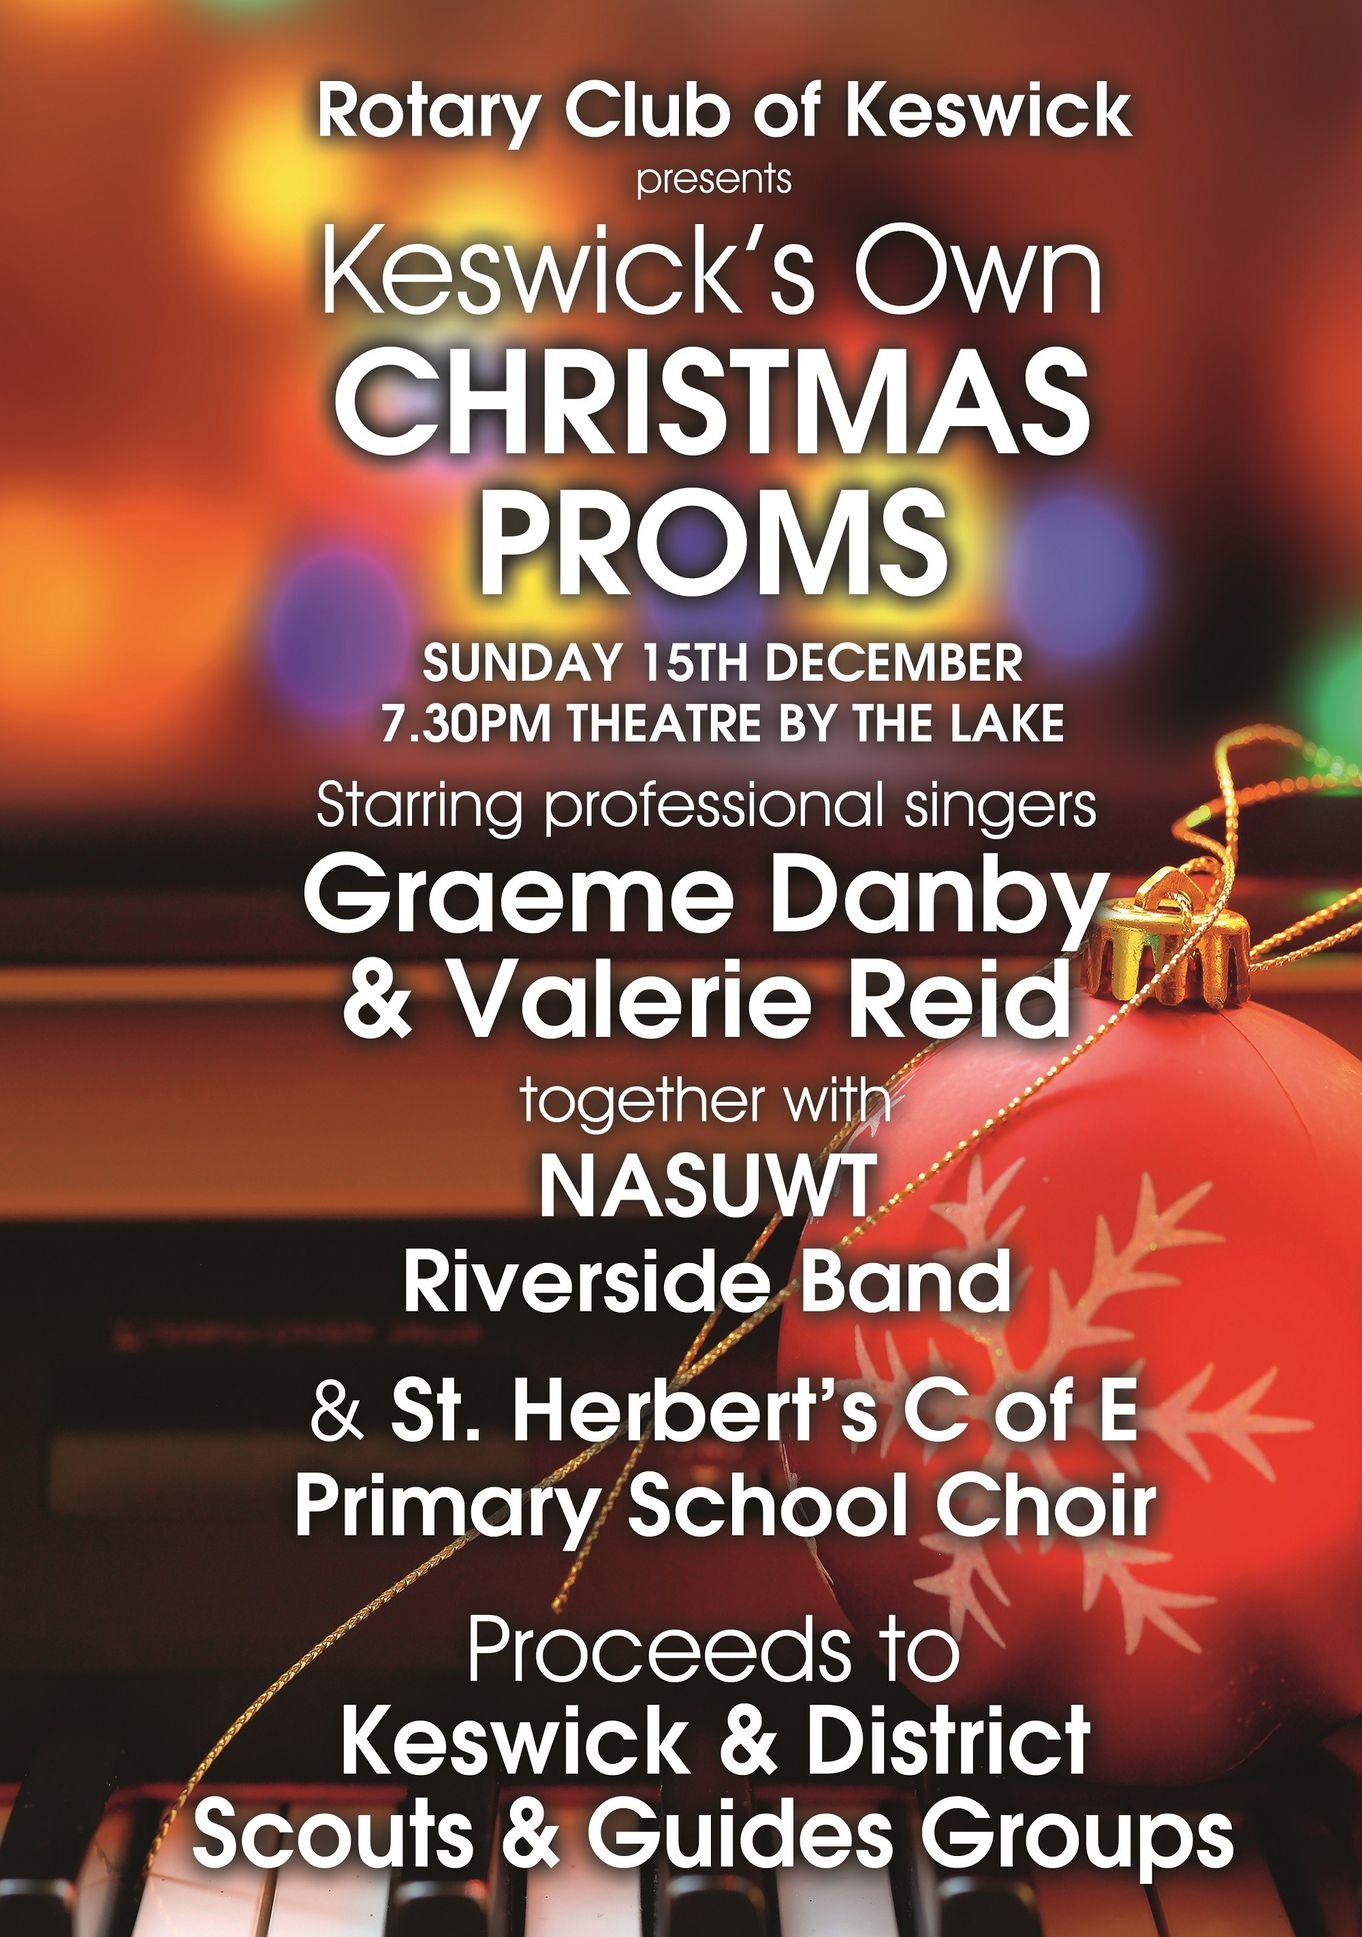 The Rotary Club of Keswick presents Keswick's Own Christmas Proms